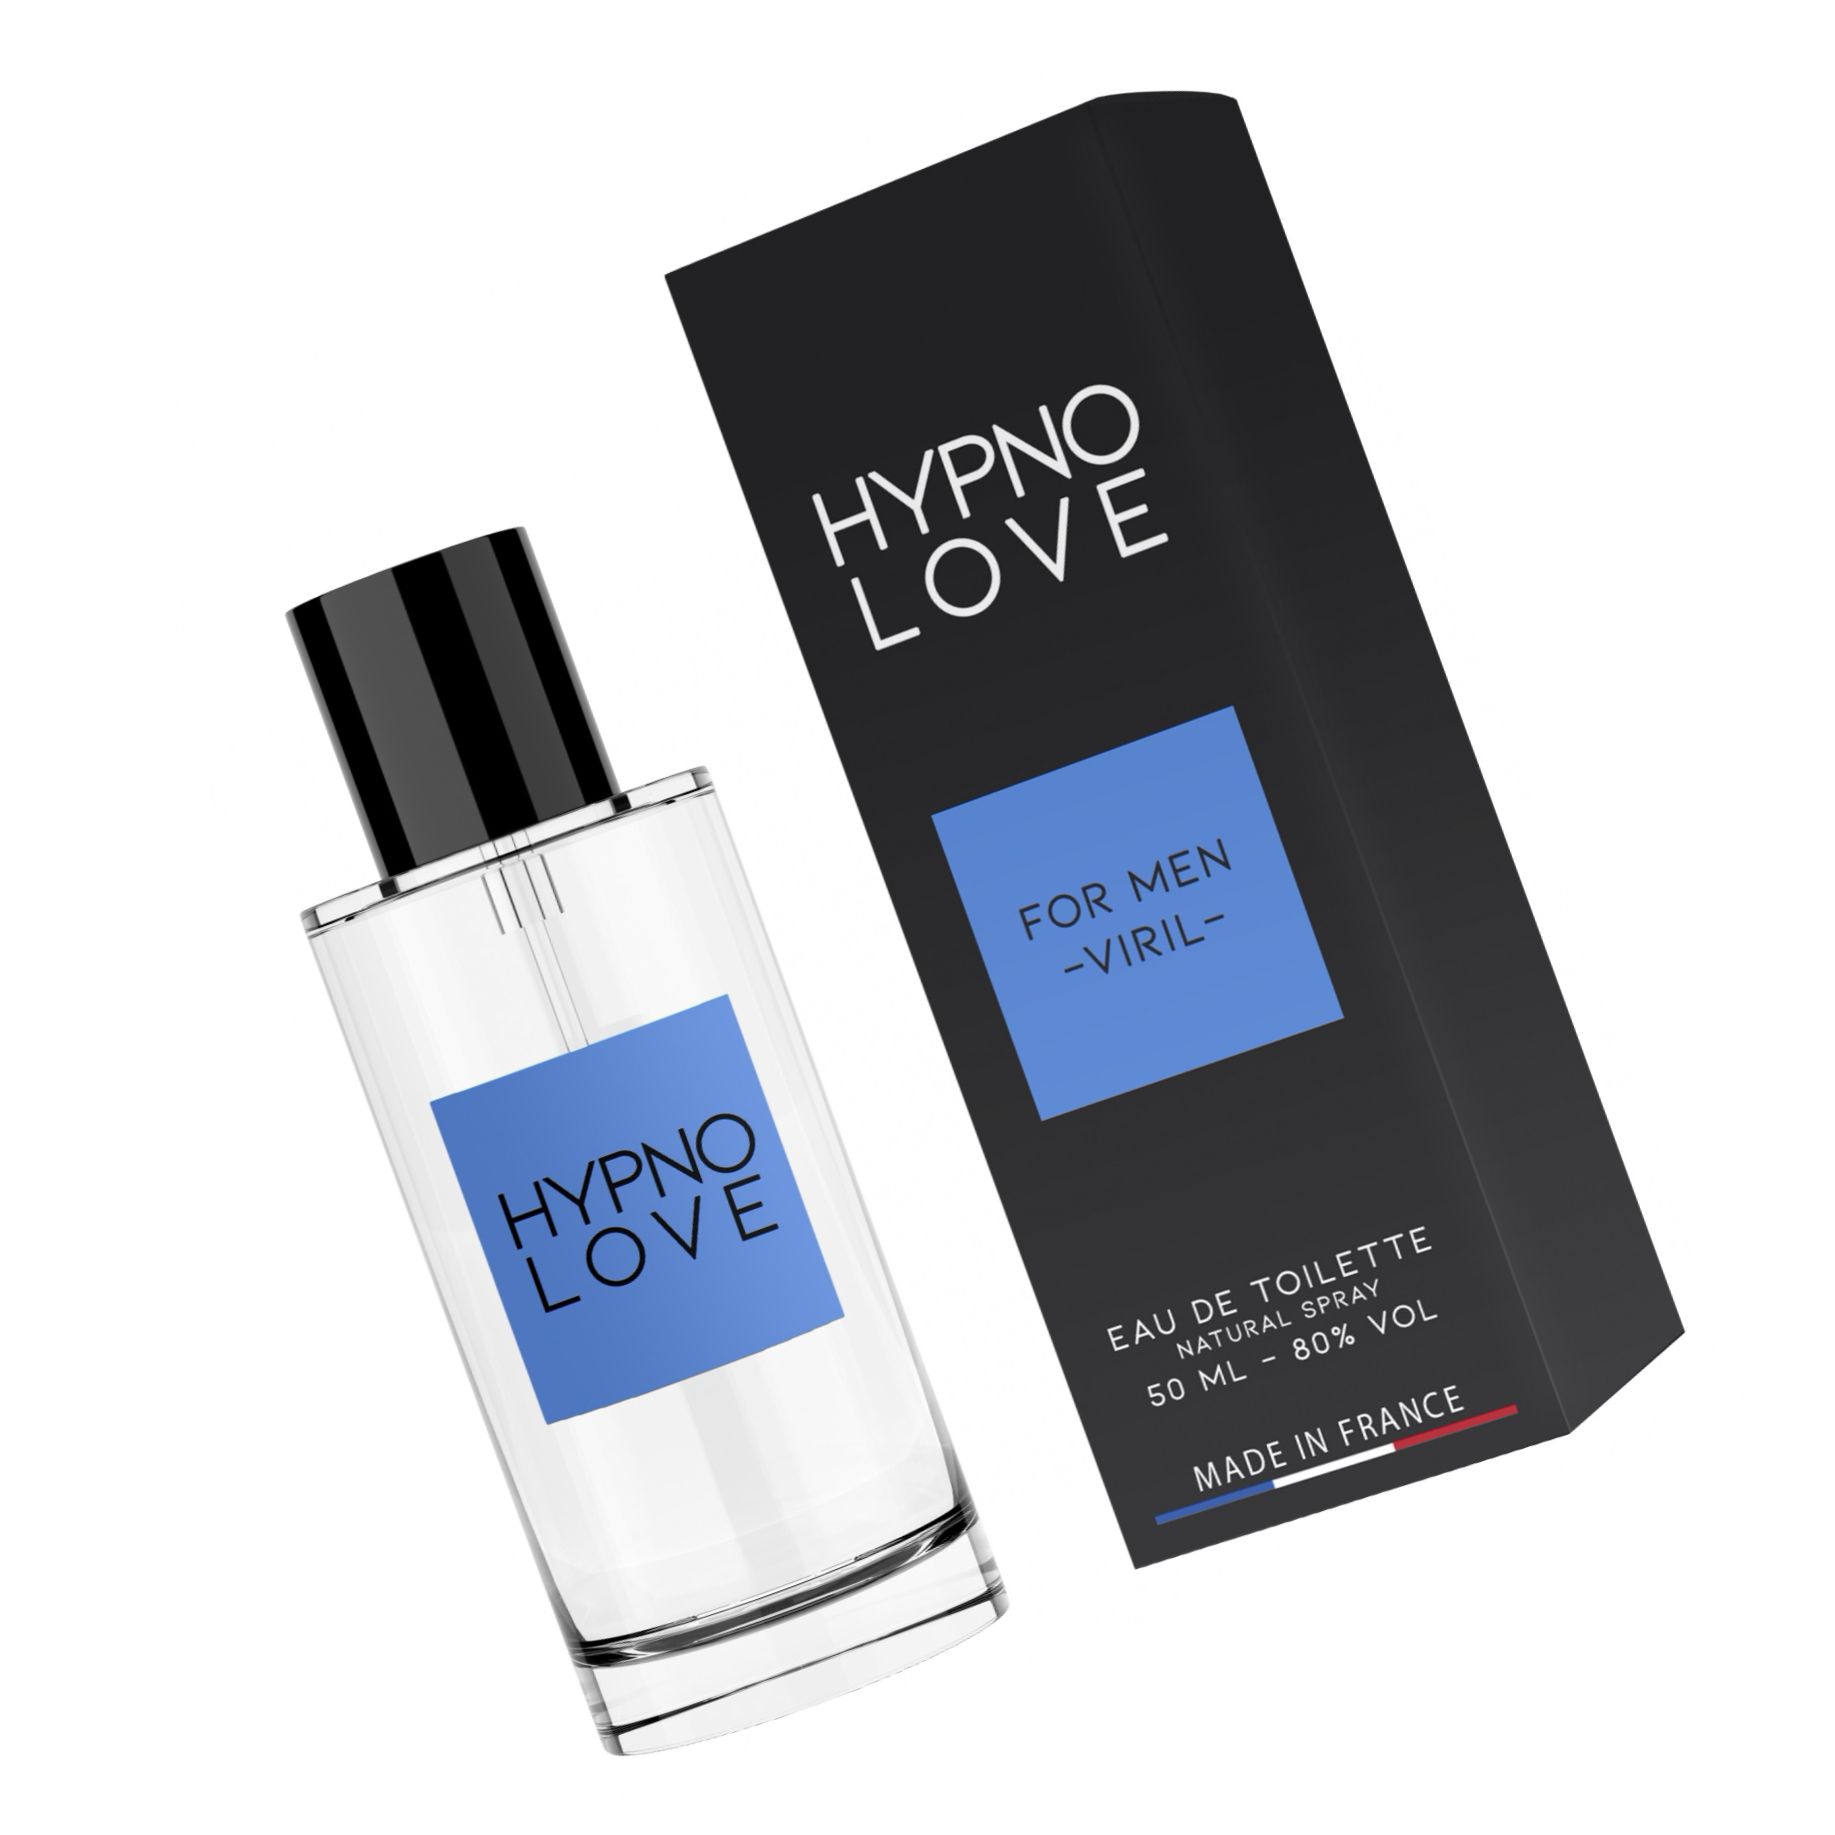 Parfum Feromoni Hypno-Love